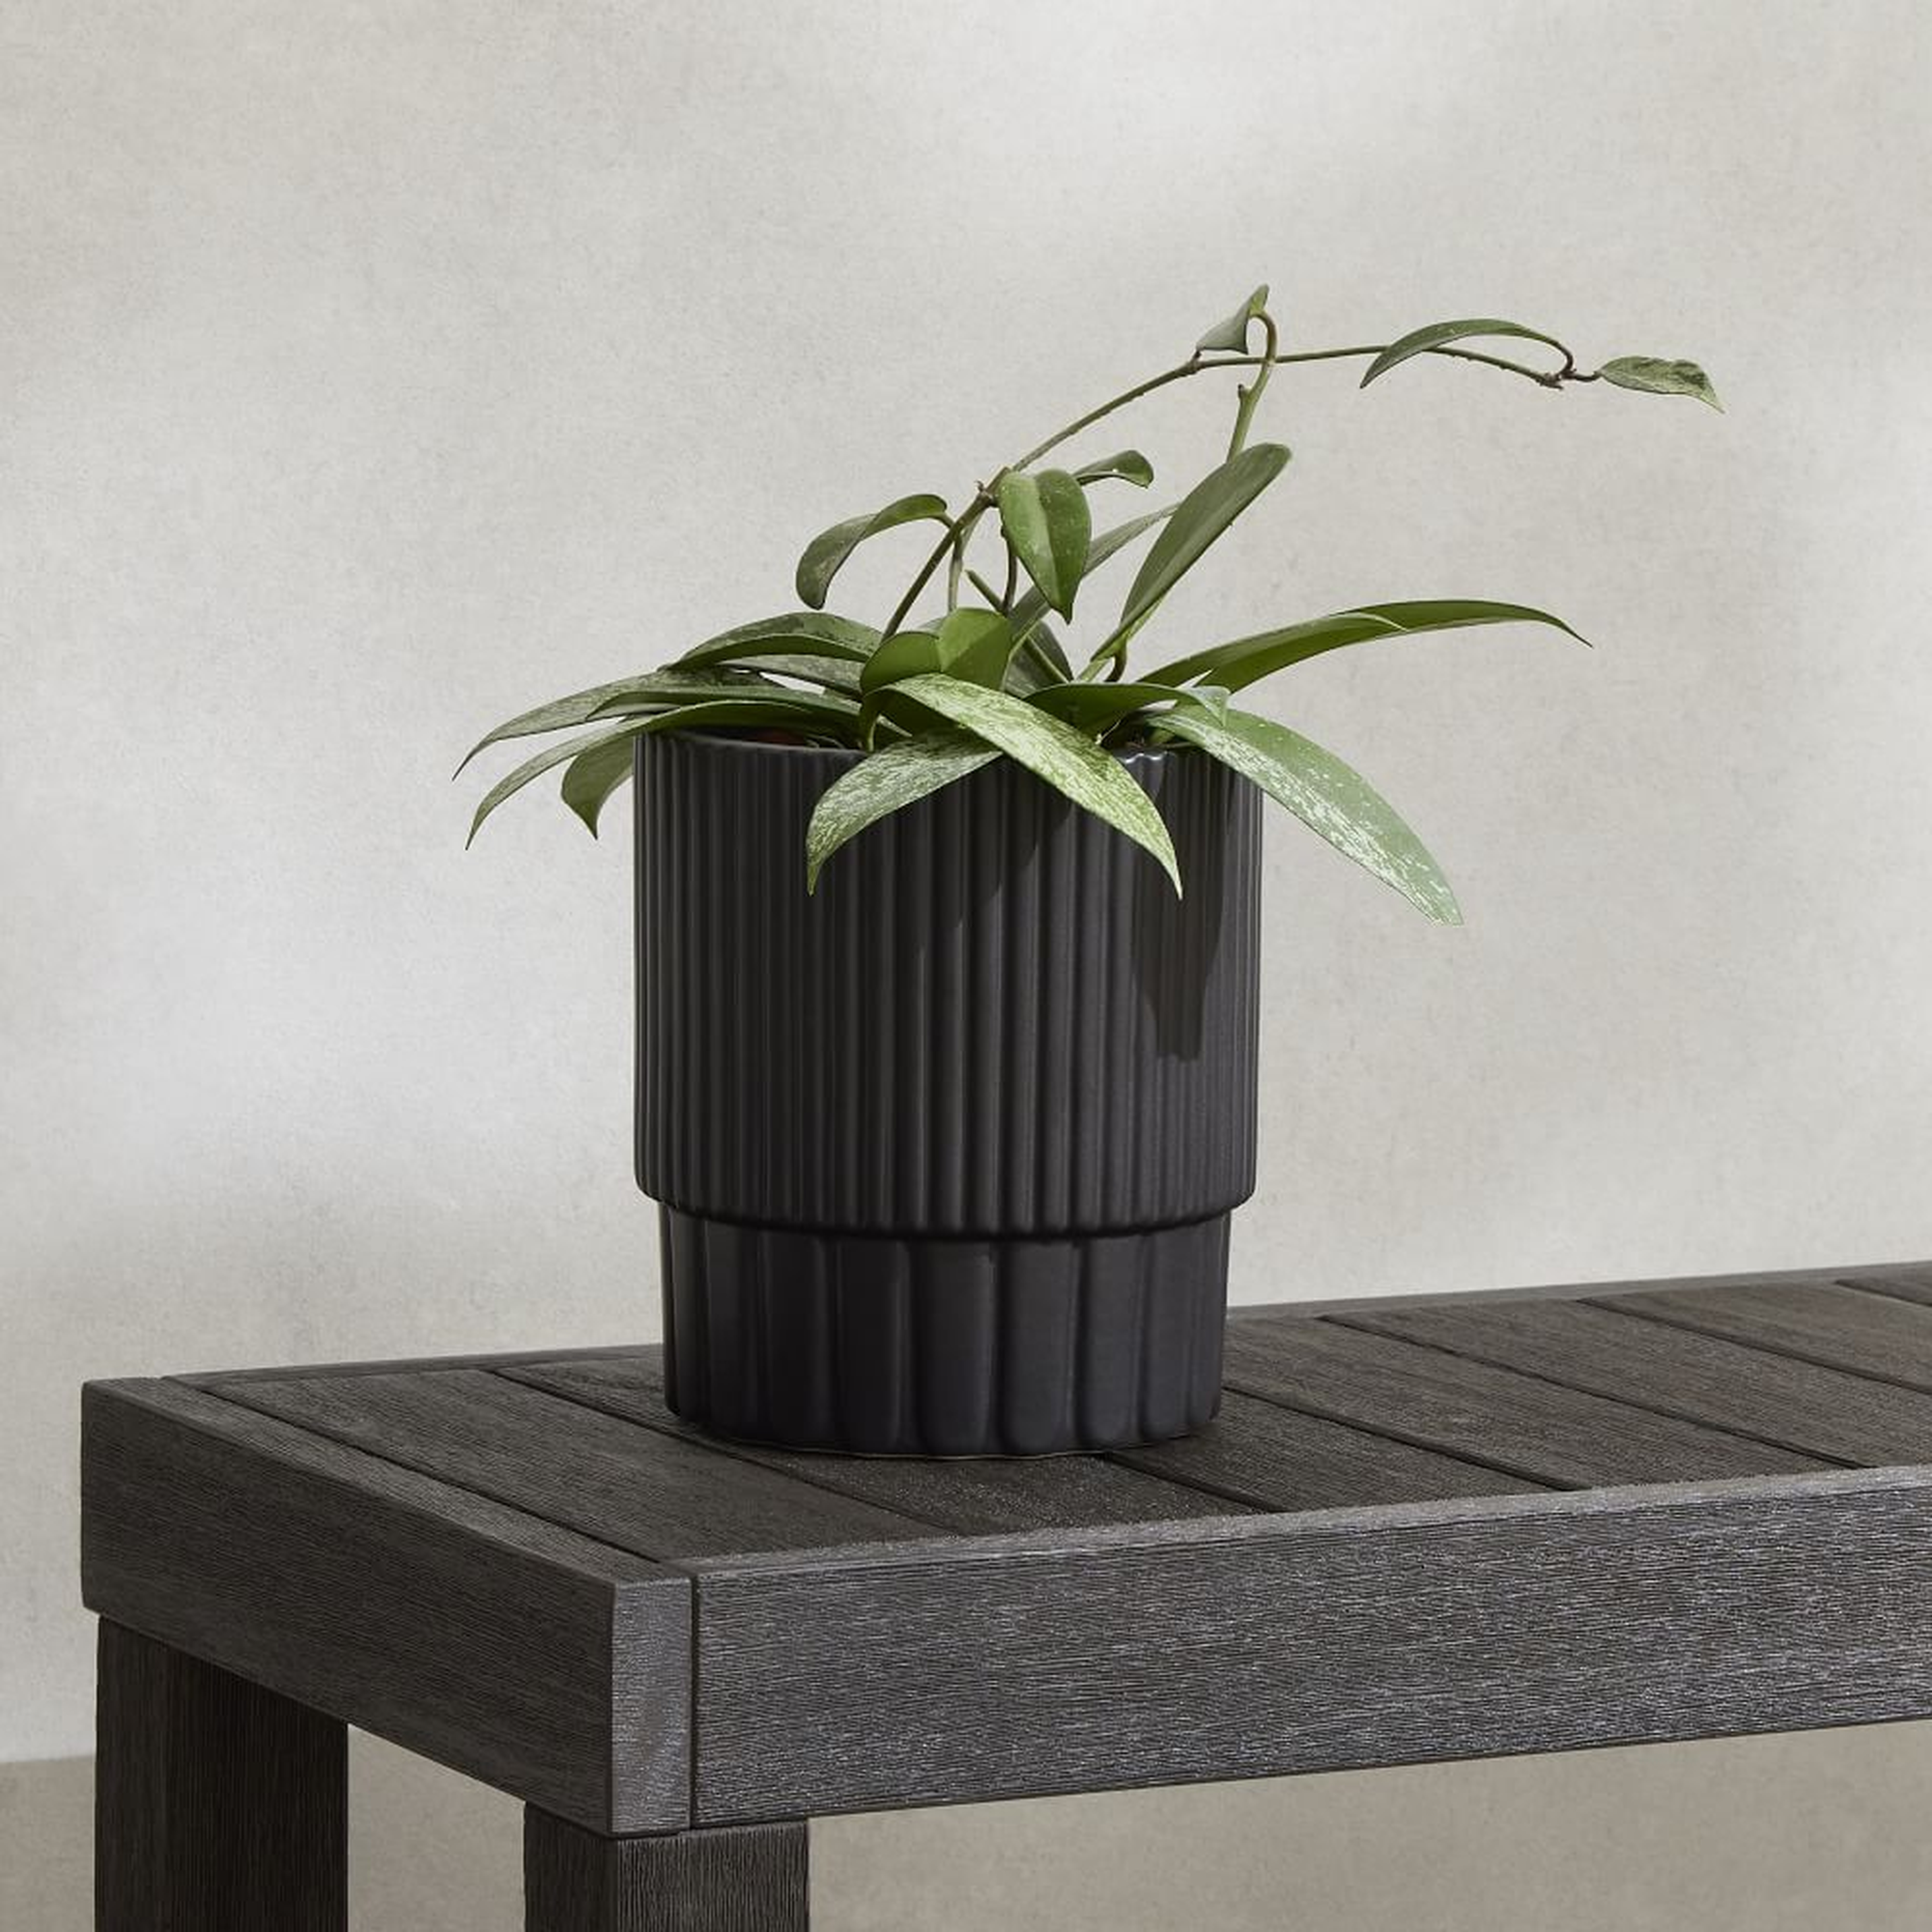 Fluted Ceramic Indoor/Outdoor Tabletop Planter, 7.5"D x 8"H, Black - West Elm